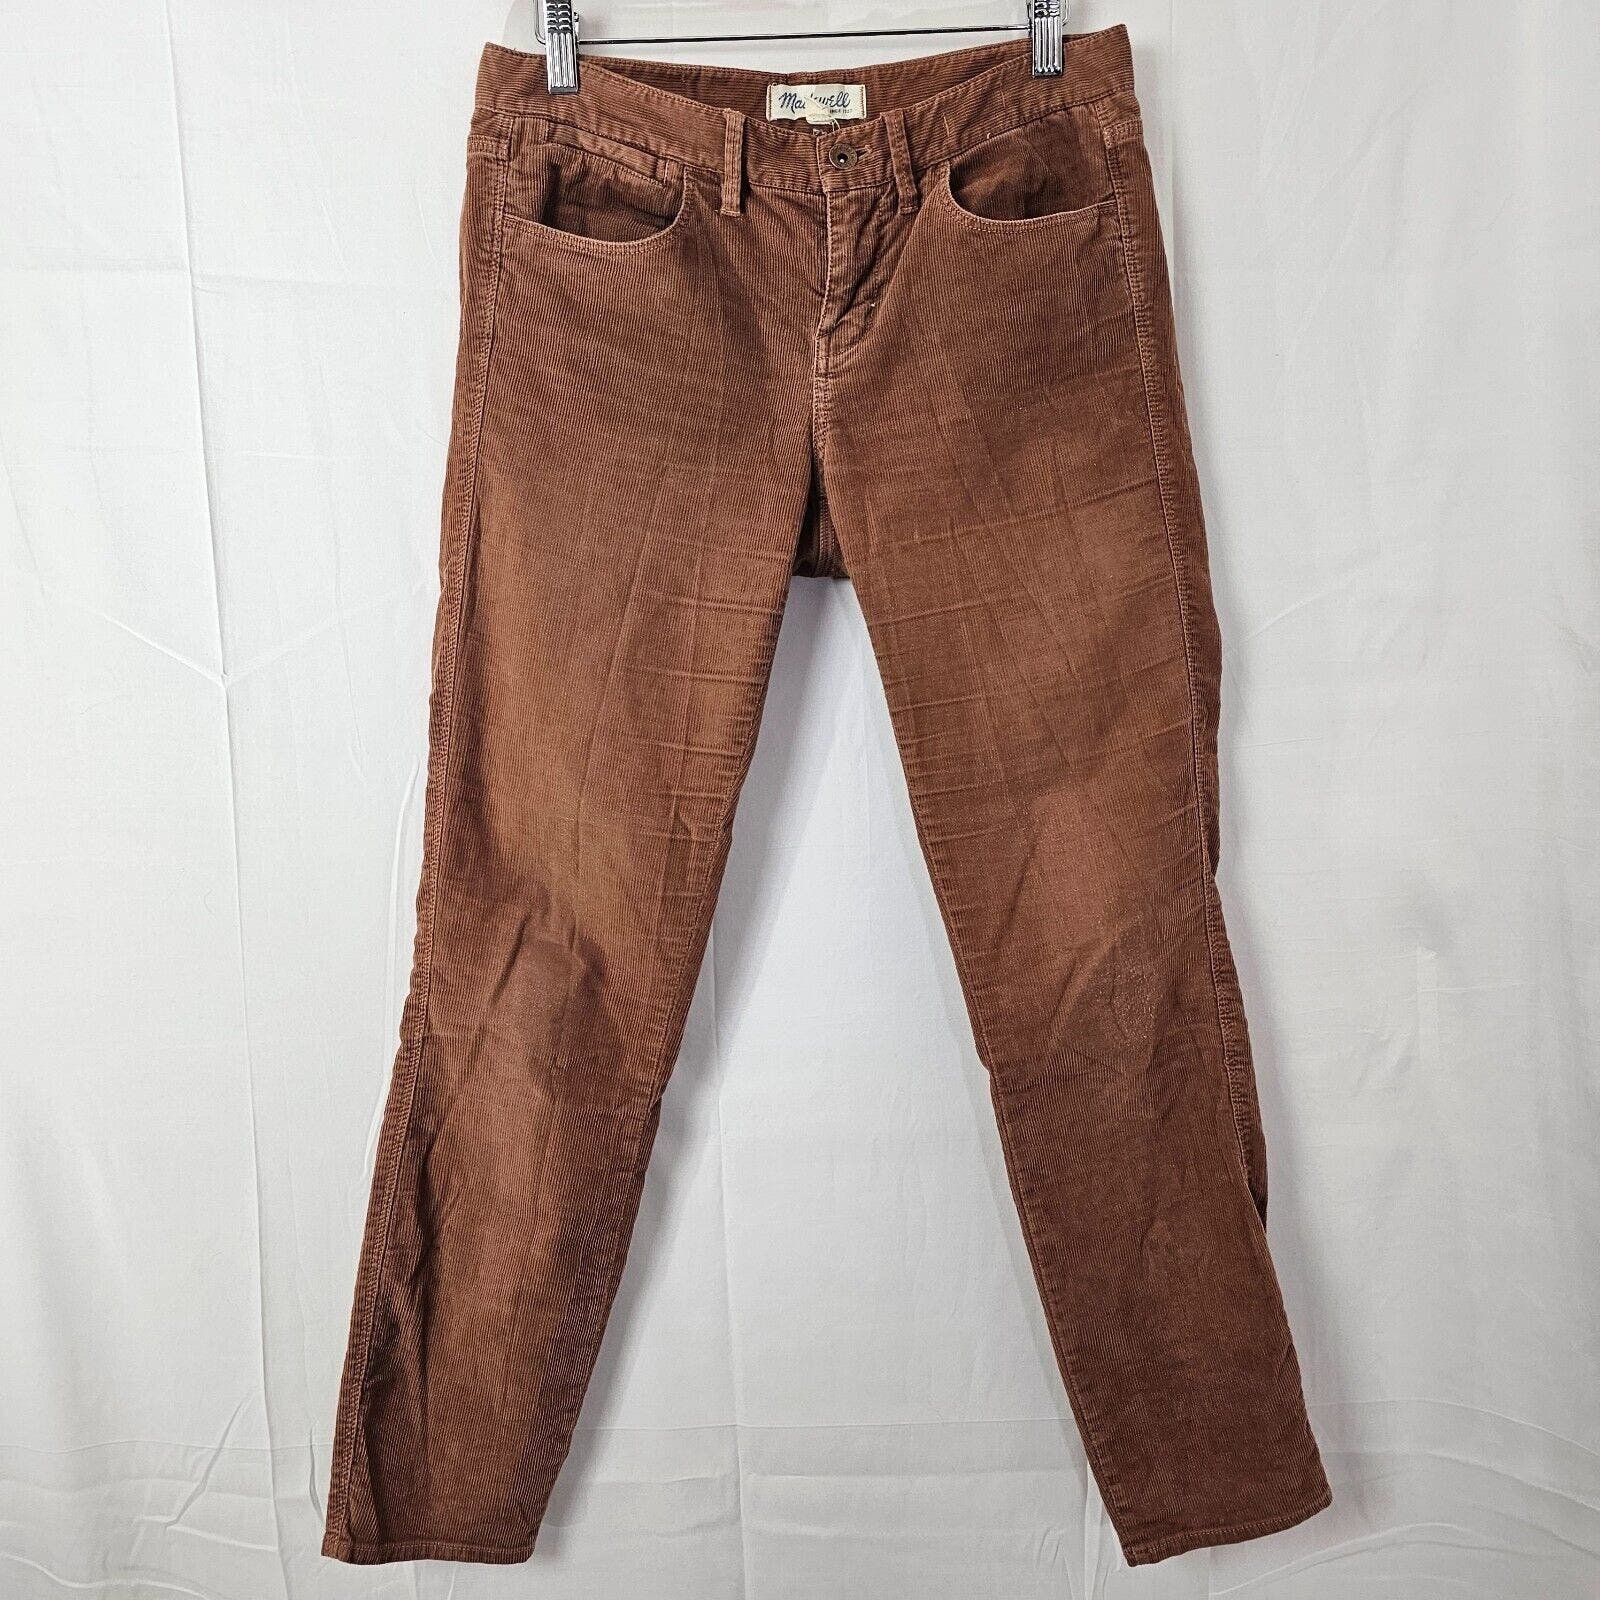 Madewell Pants Womens 27 Brown Corduroy Skinny Jeans Low Rise 98907 Stretch Tan Jj9b2eVKv